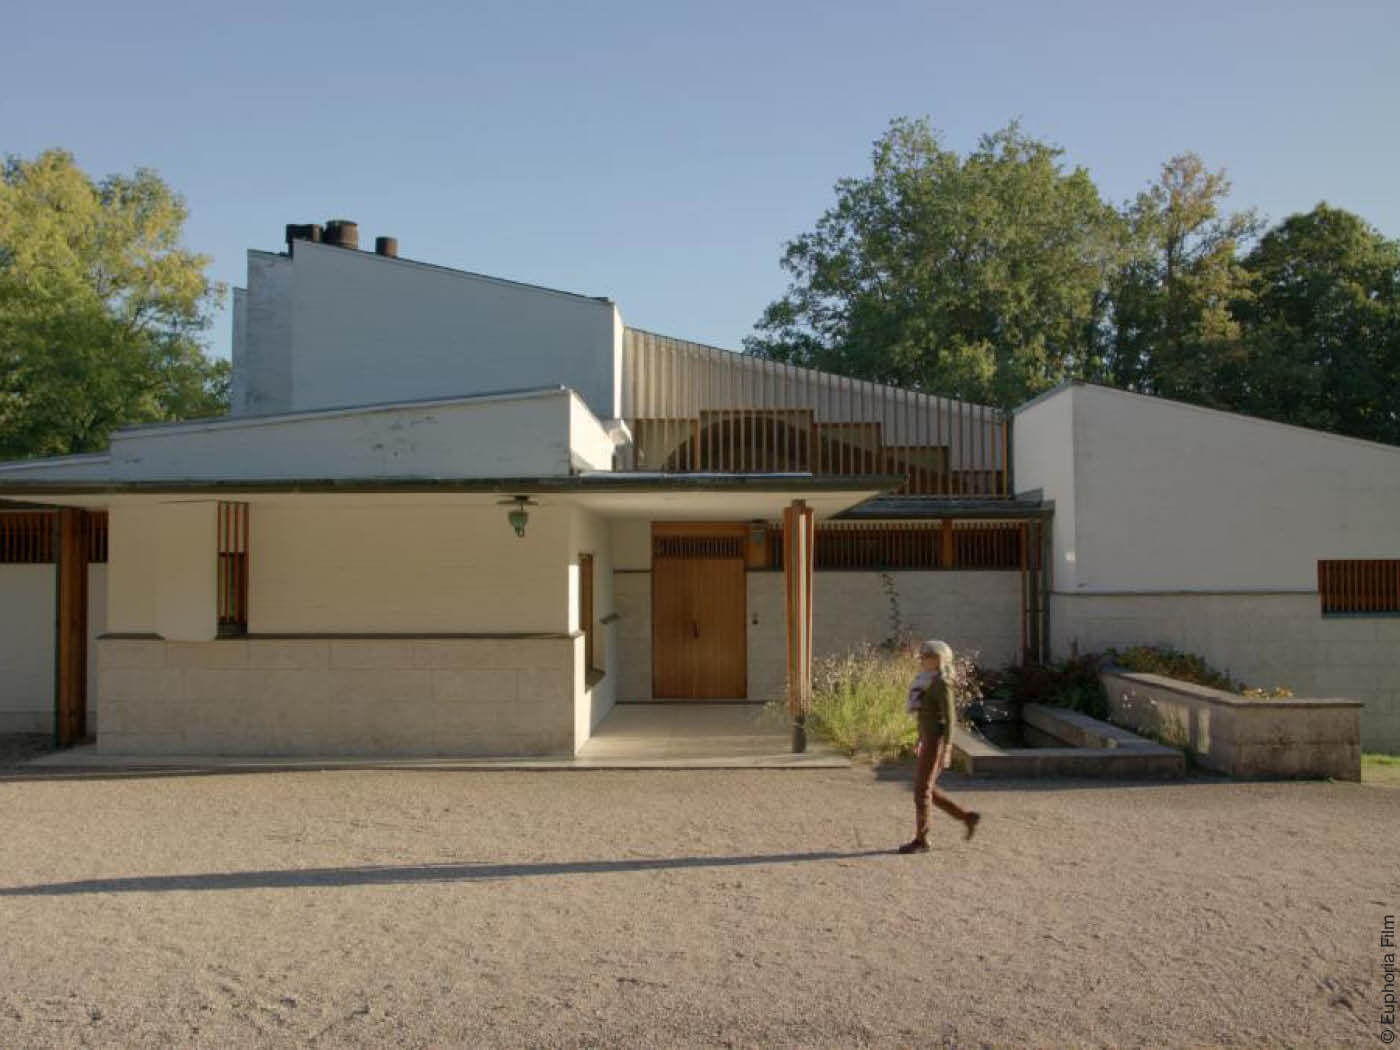 Maison Louis Carree von Aalto